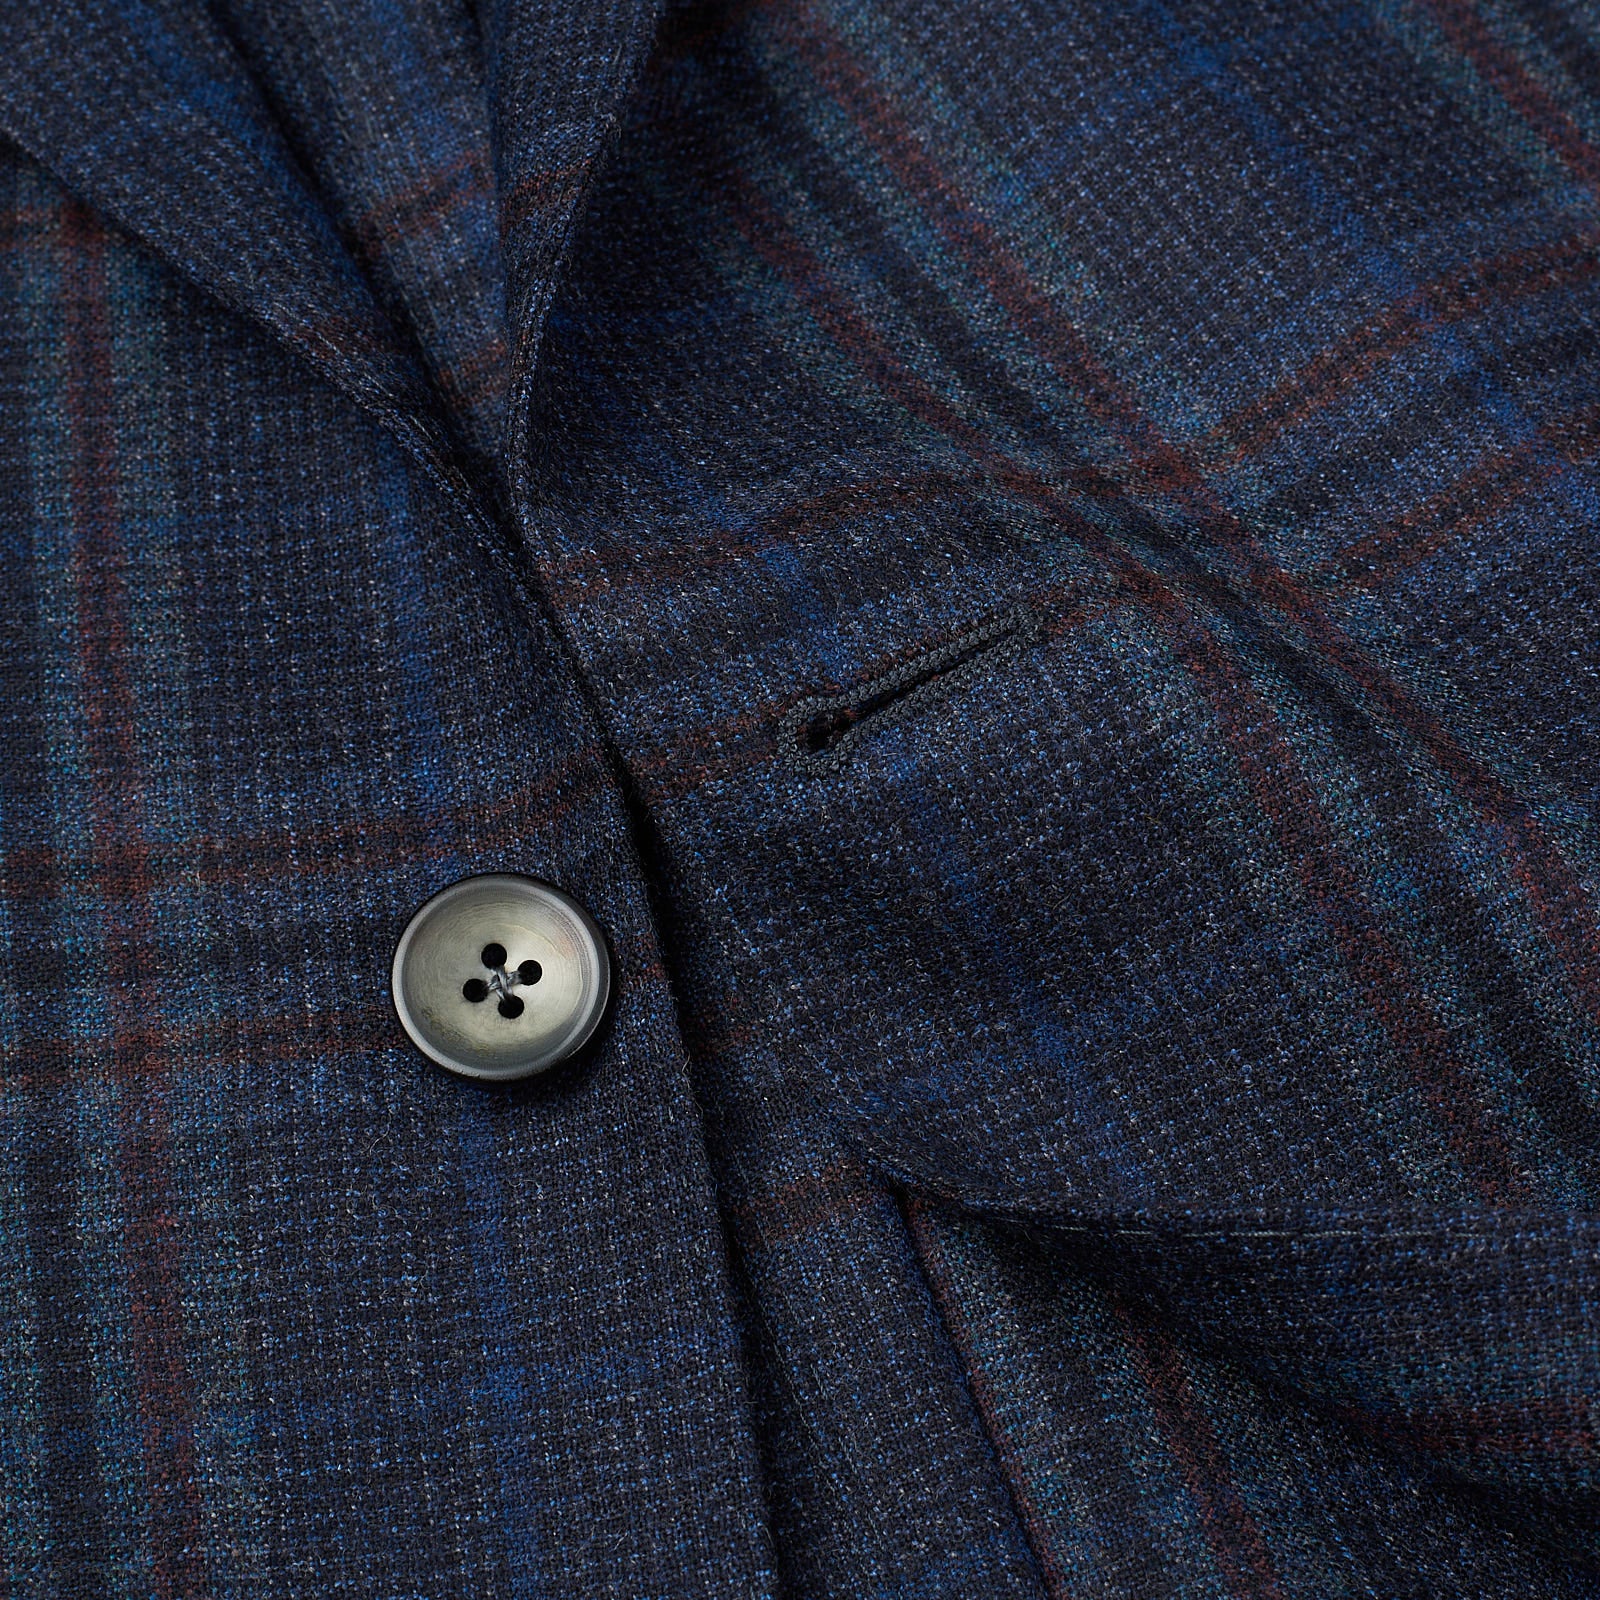 BOGLIOLI Milano "K.Jacket" Blue Plaid Virgin Wool Flannel Unlined Jacket EU 50 NEW US 40 BOGLIOLI